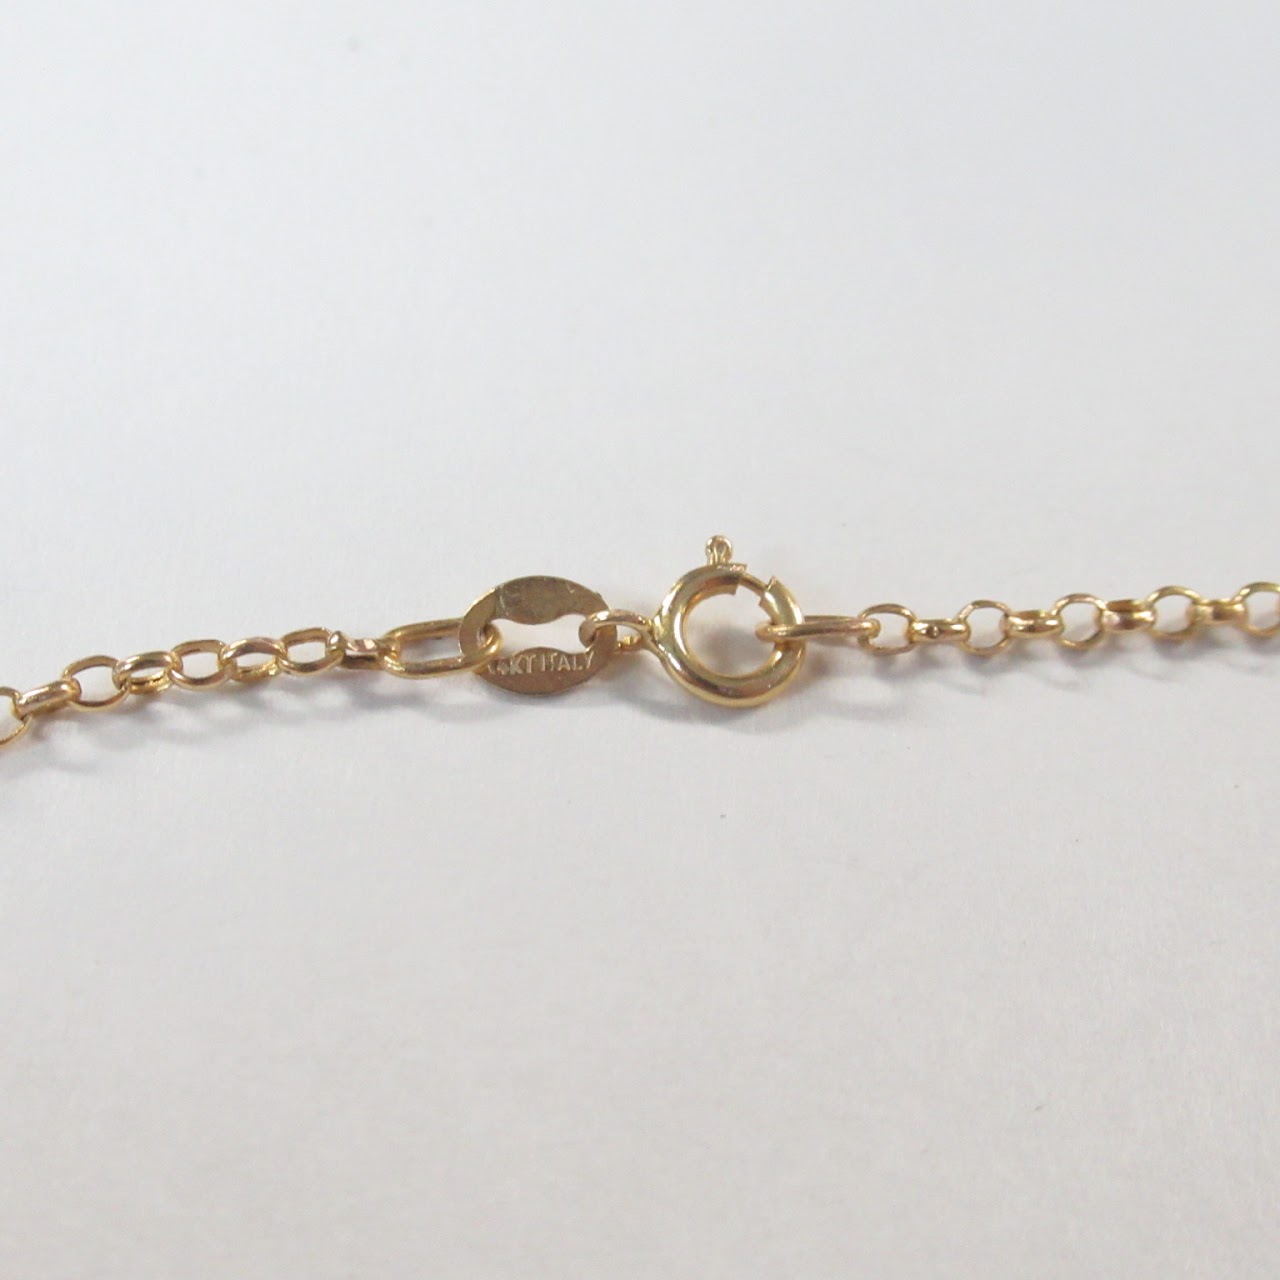 14K Gold Italian Chain Necklace